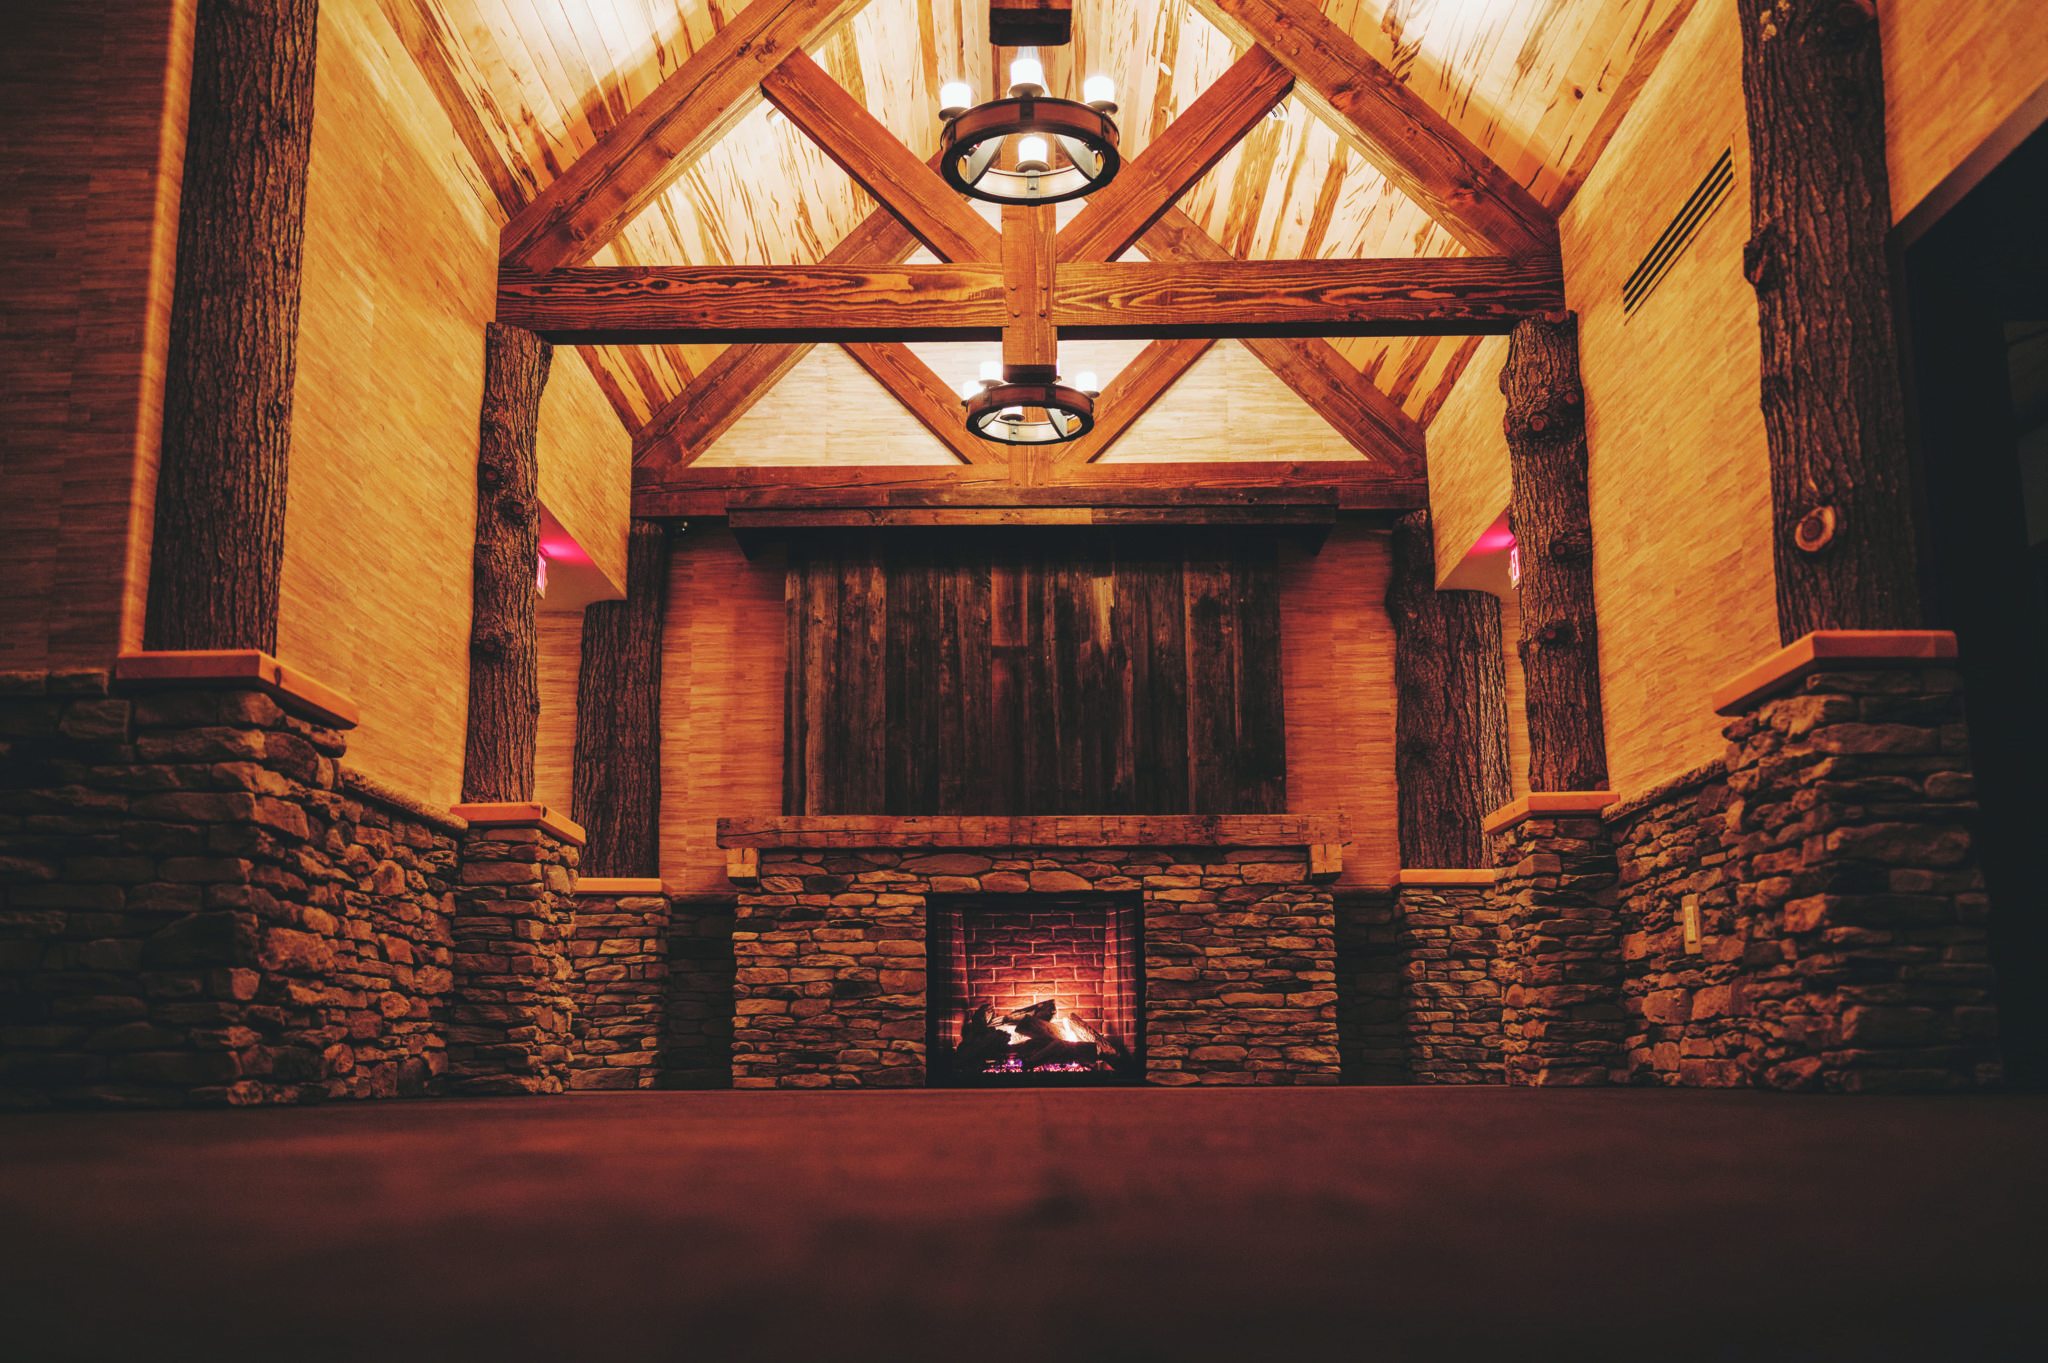 The Barn fireplace